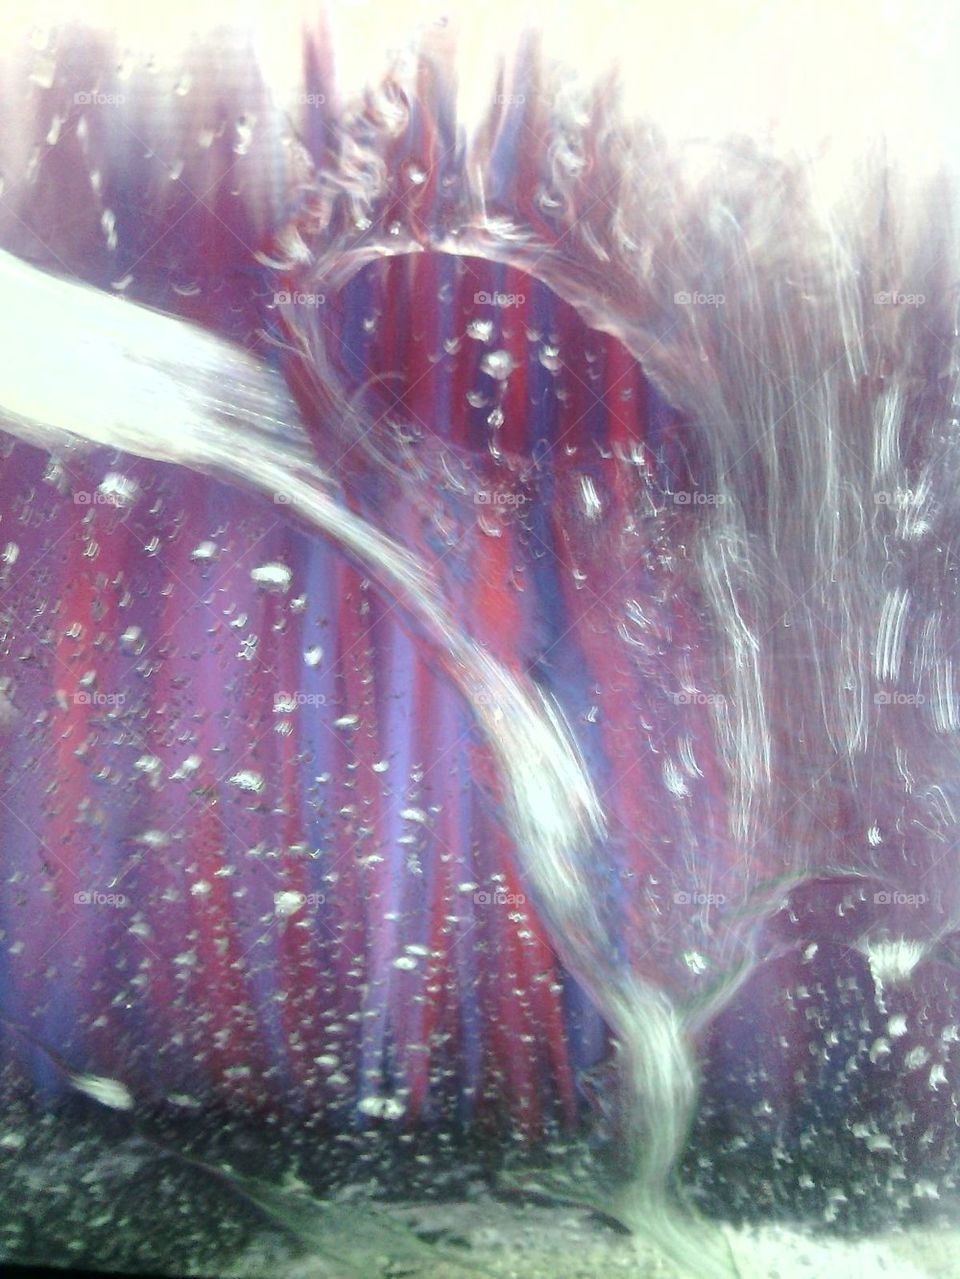 inside the car wash